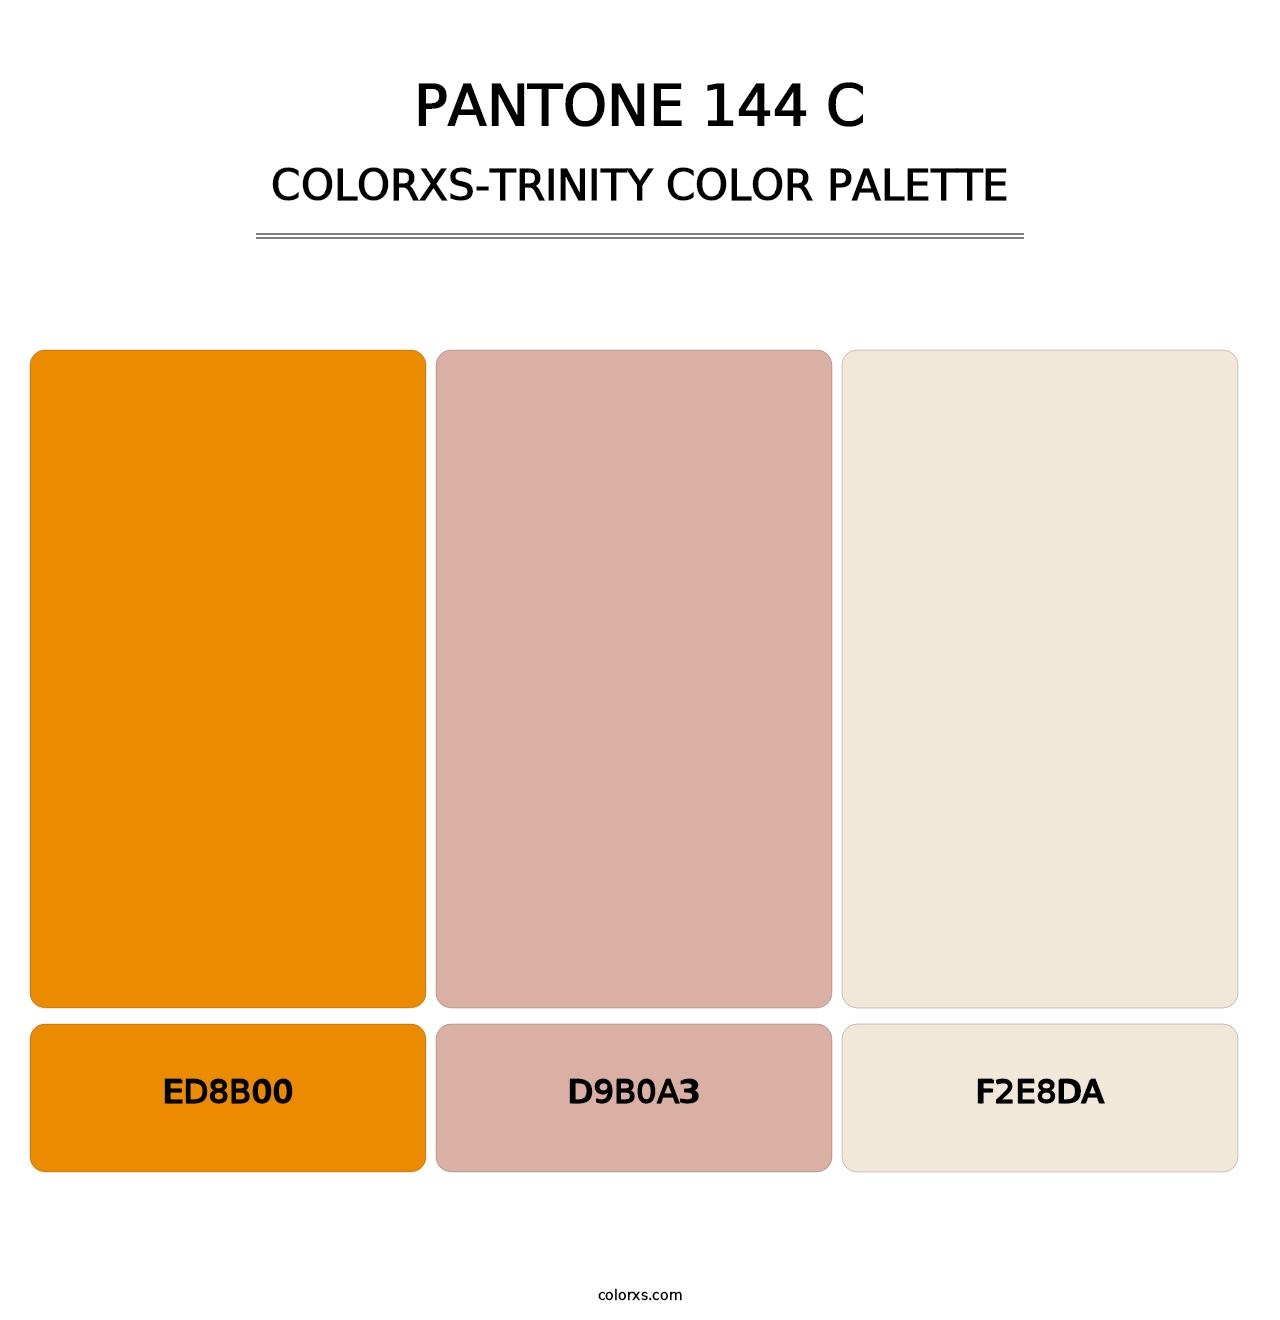 PANTONE 144 C - Colorxs Trinity Palette